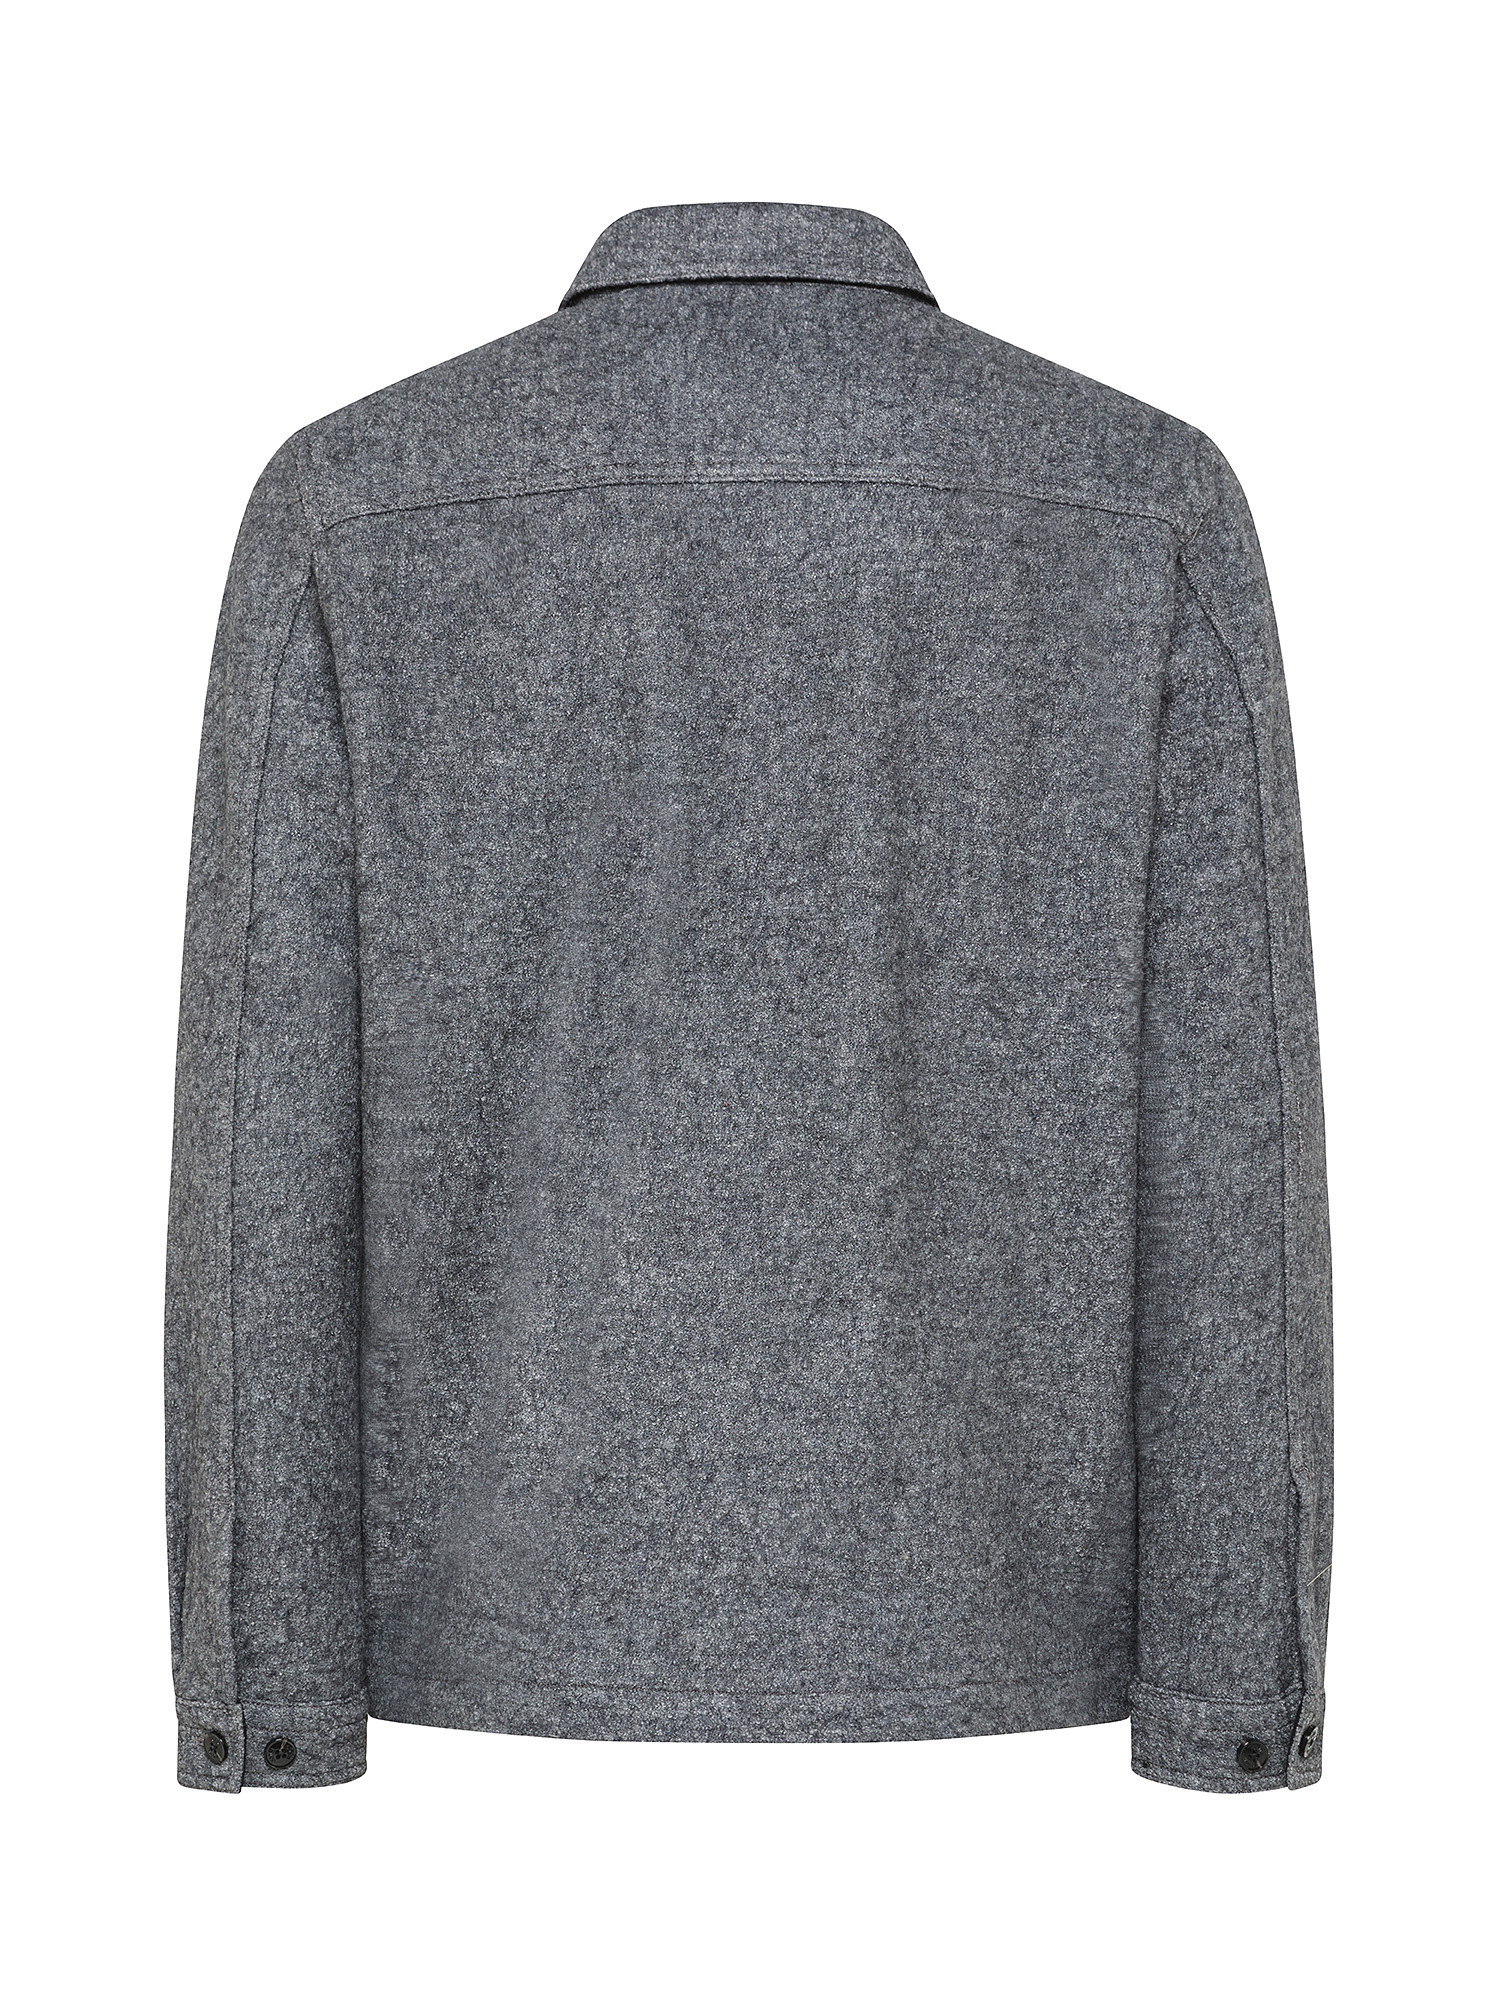 Hugo - Oversized shirt jacket in wool blend, Grey, large image number 1